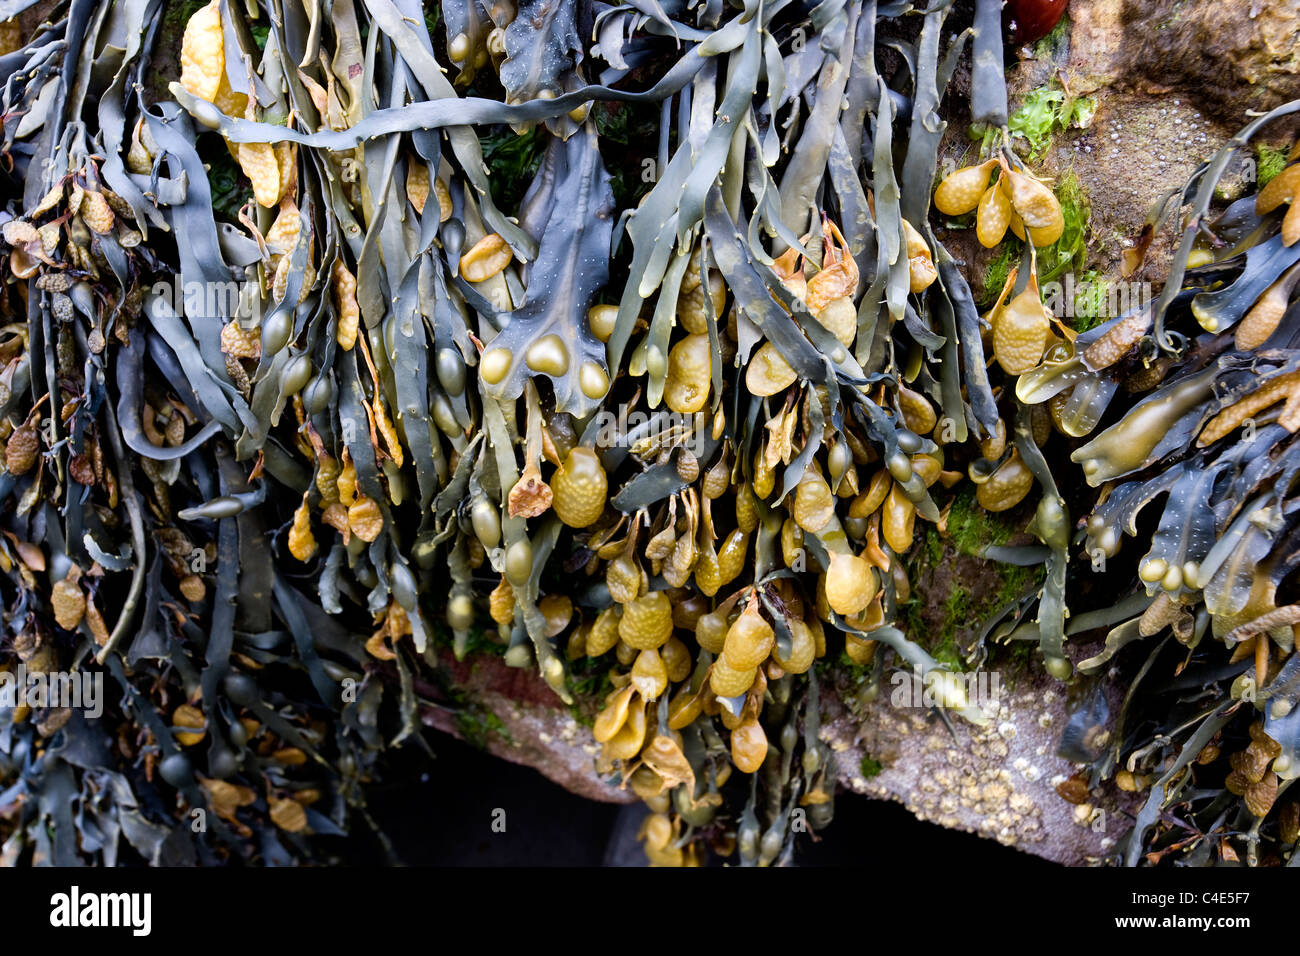 Sea weed at Runswick Bay, East Coast Yorkshire, England Stock Photo